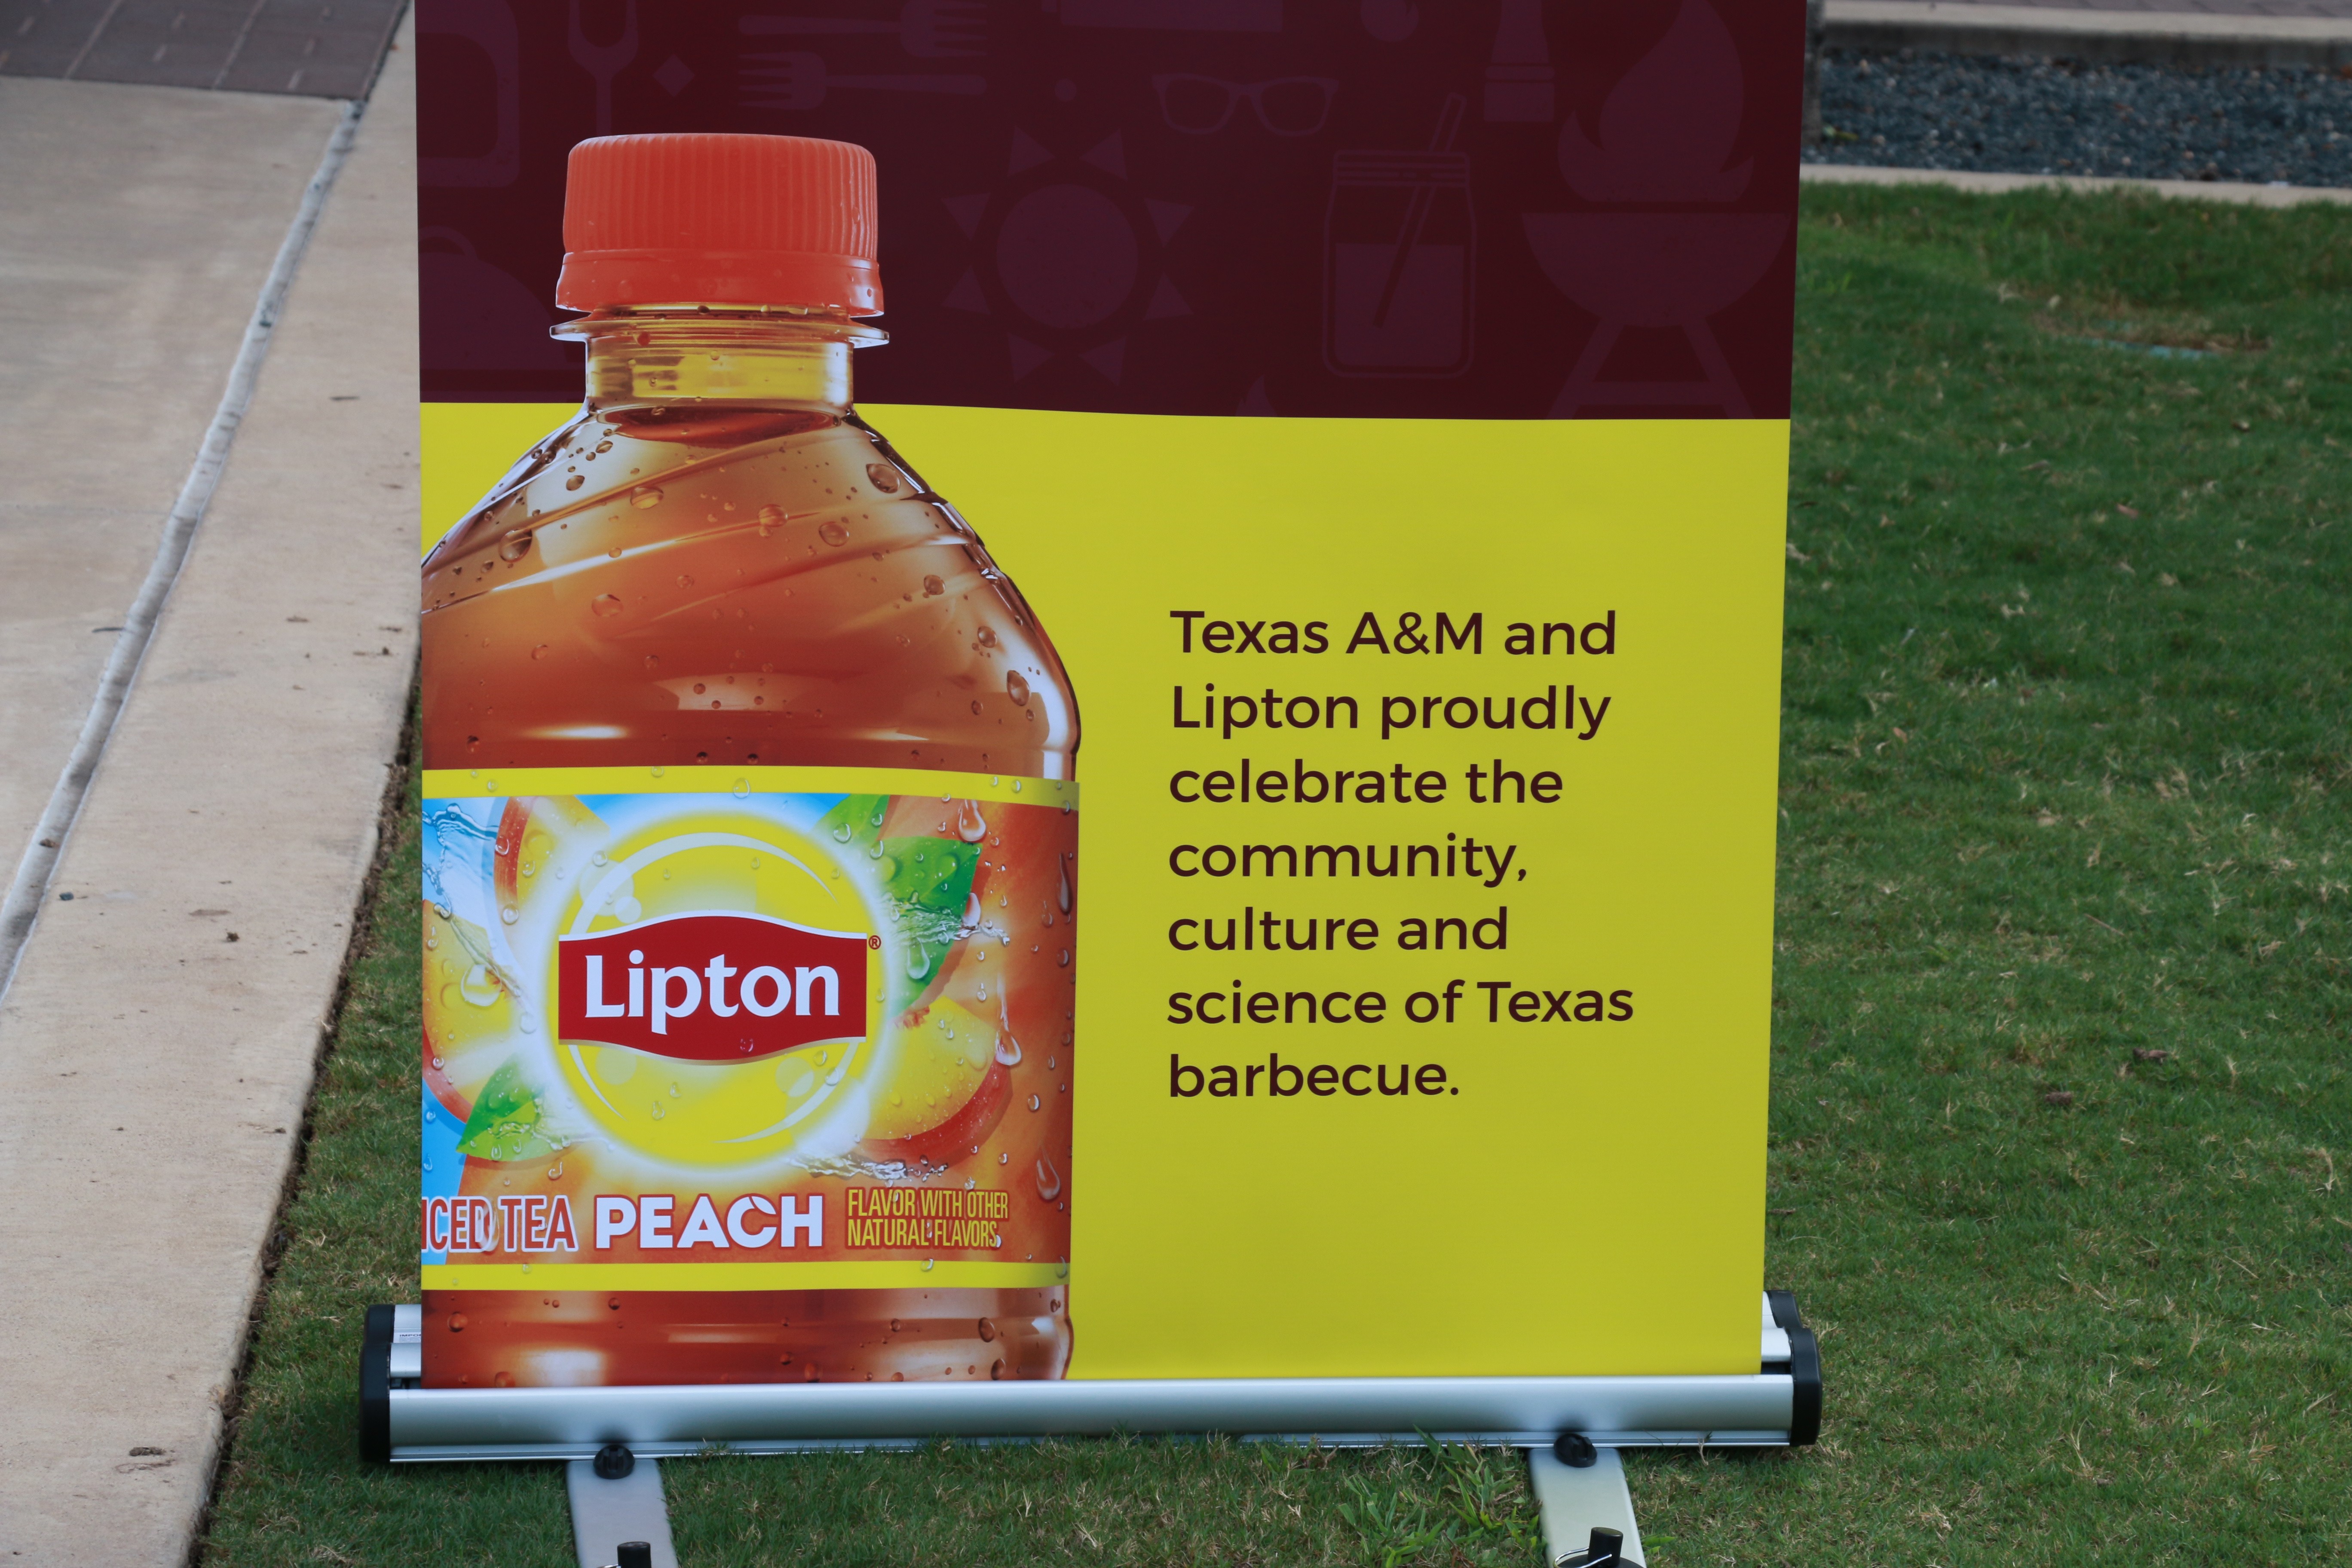 Lipton Tea and Texas A&M BBQ Genius set up